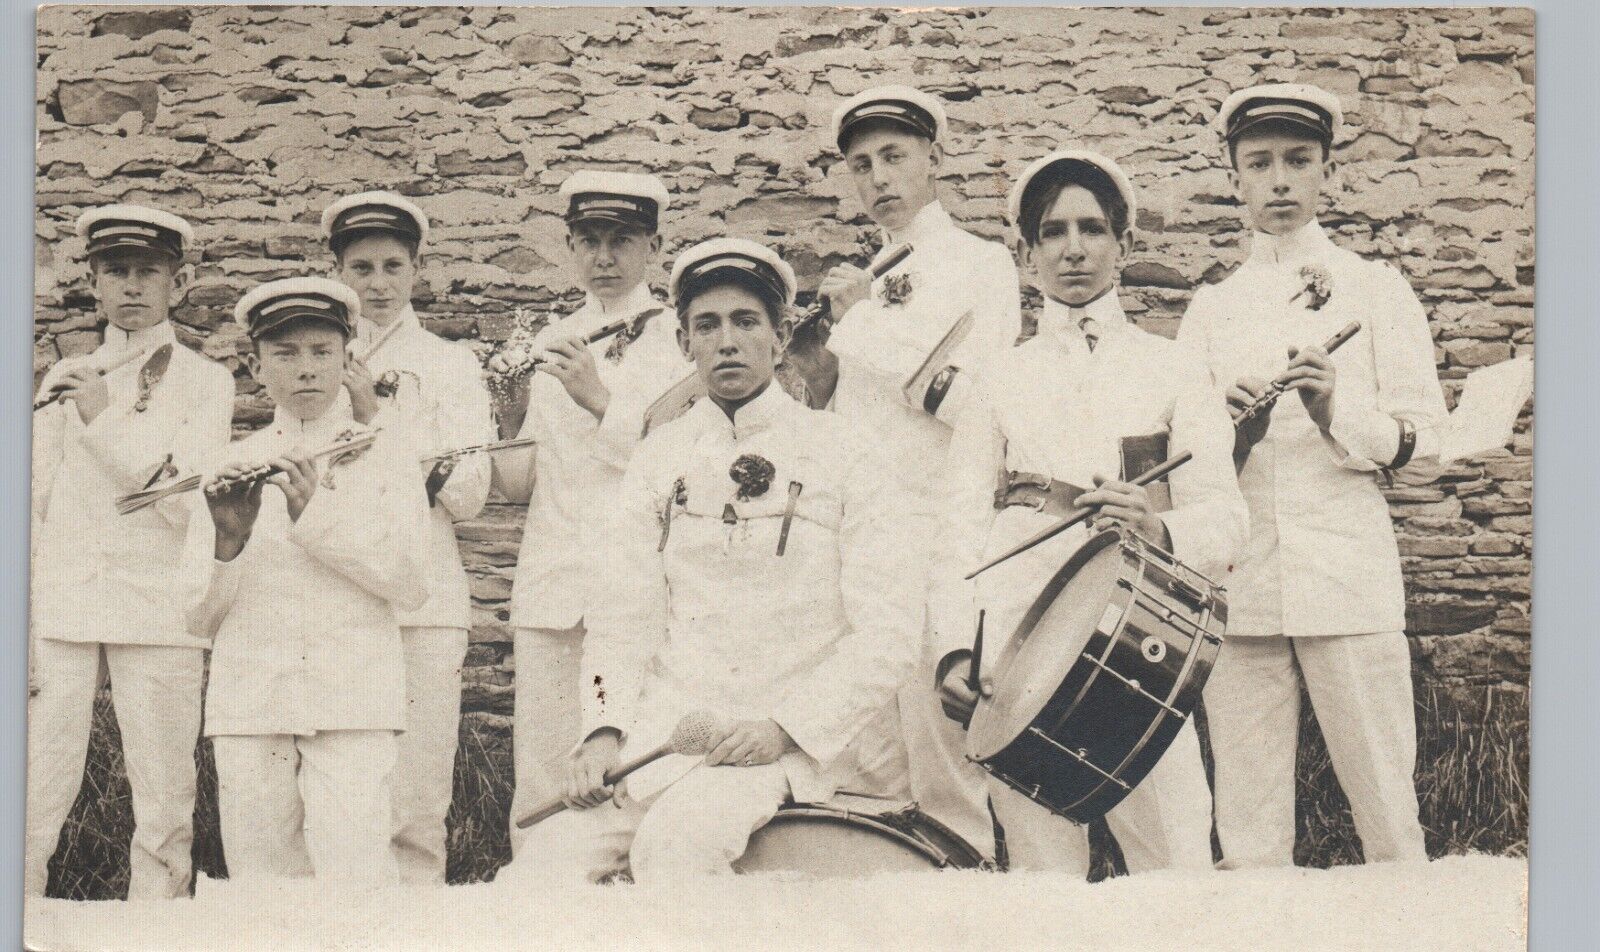 BOYS MARCHING BAND c1910s real photo postcard rppc street parade music uniform